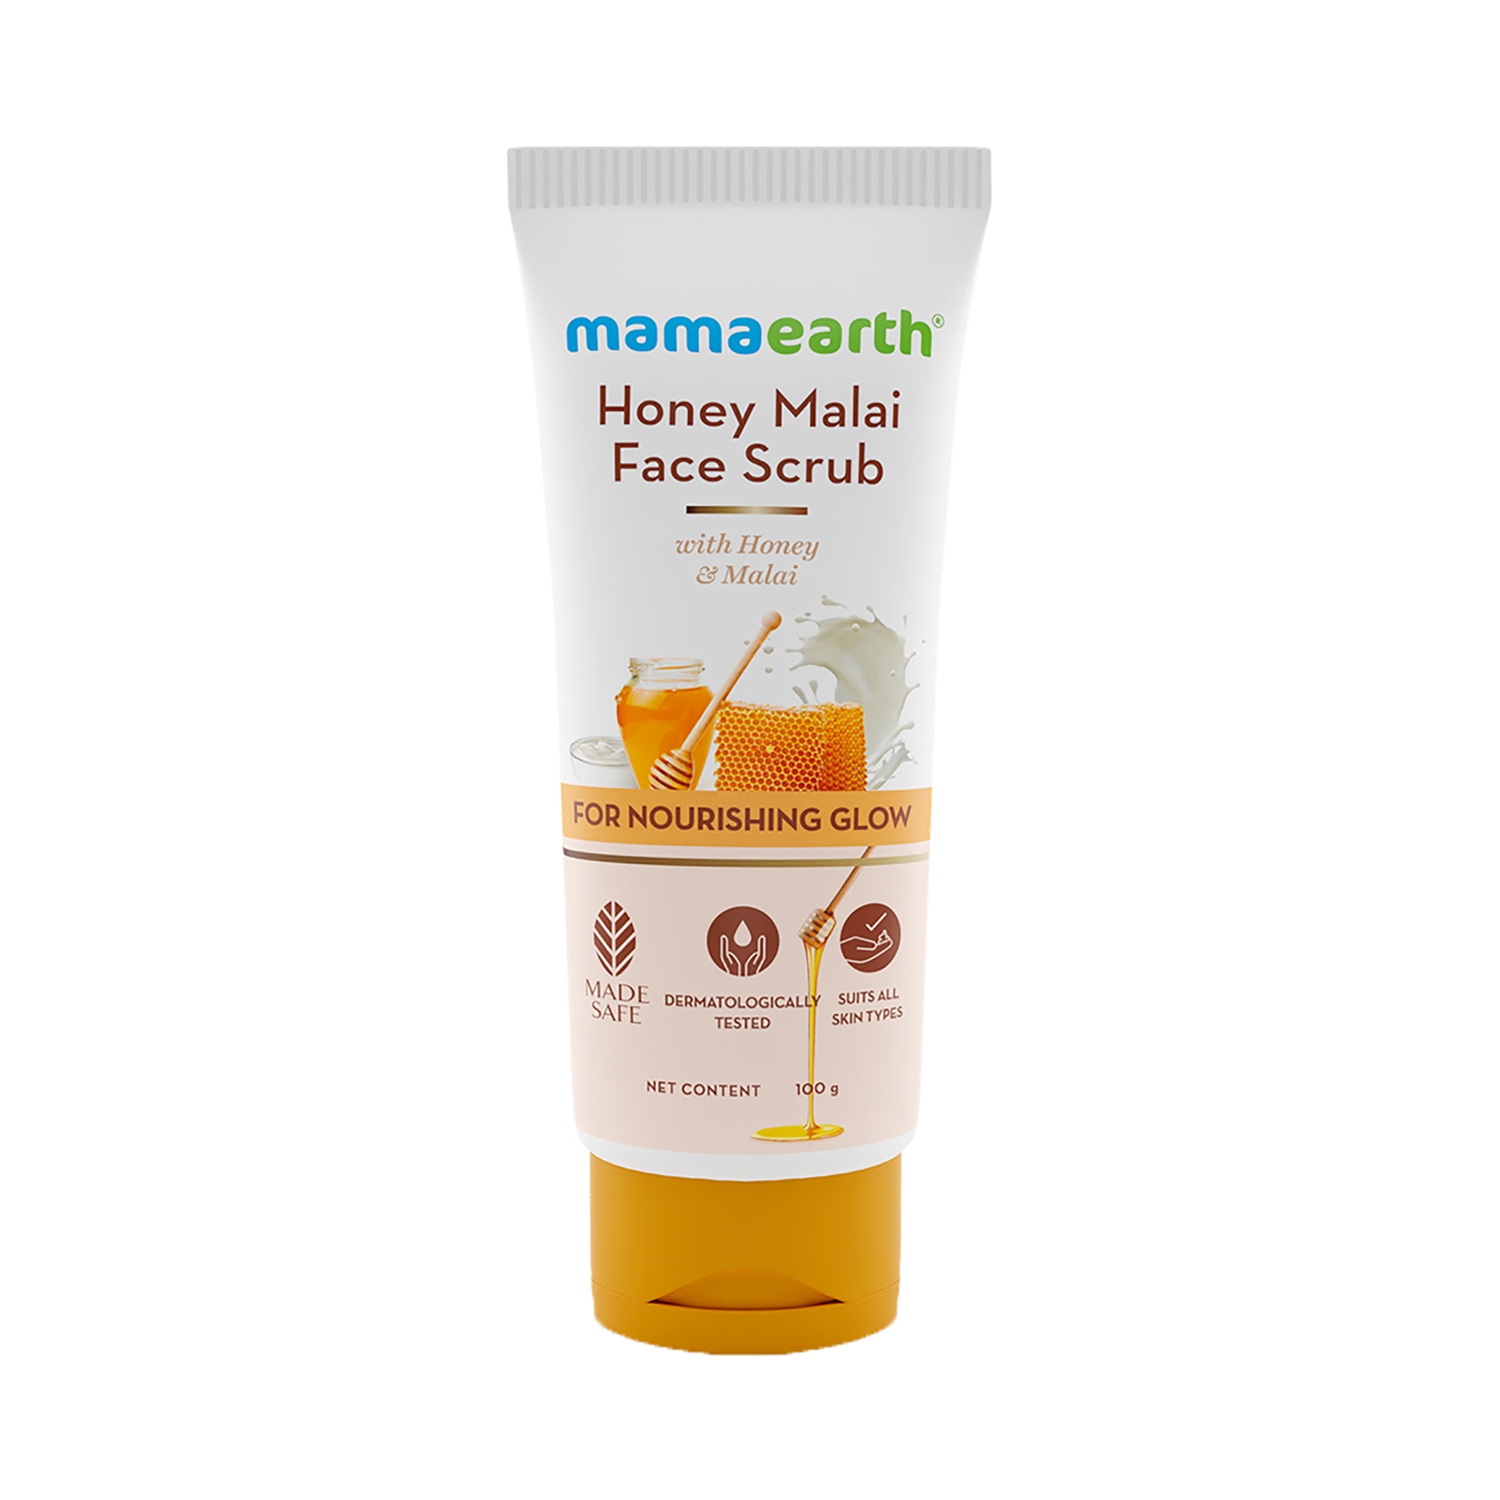 Mamaearth Honey Malai Face Scrub For Nourishing Glow (100g)